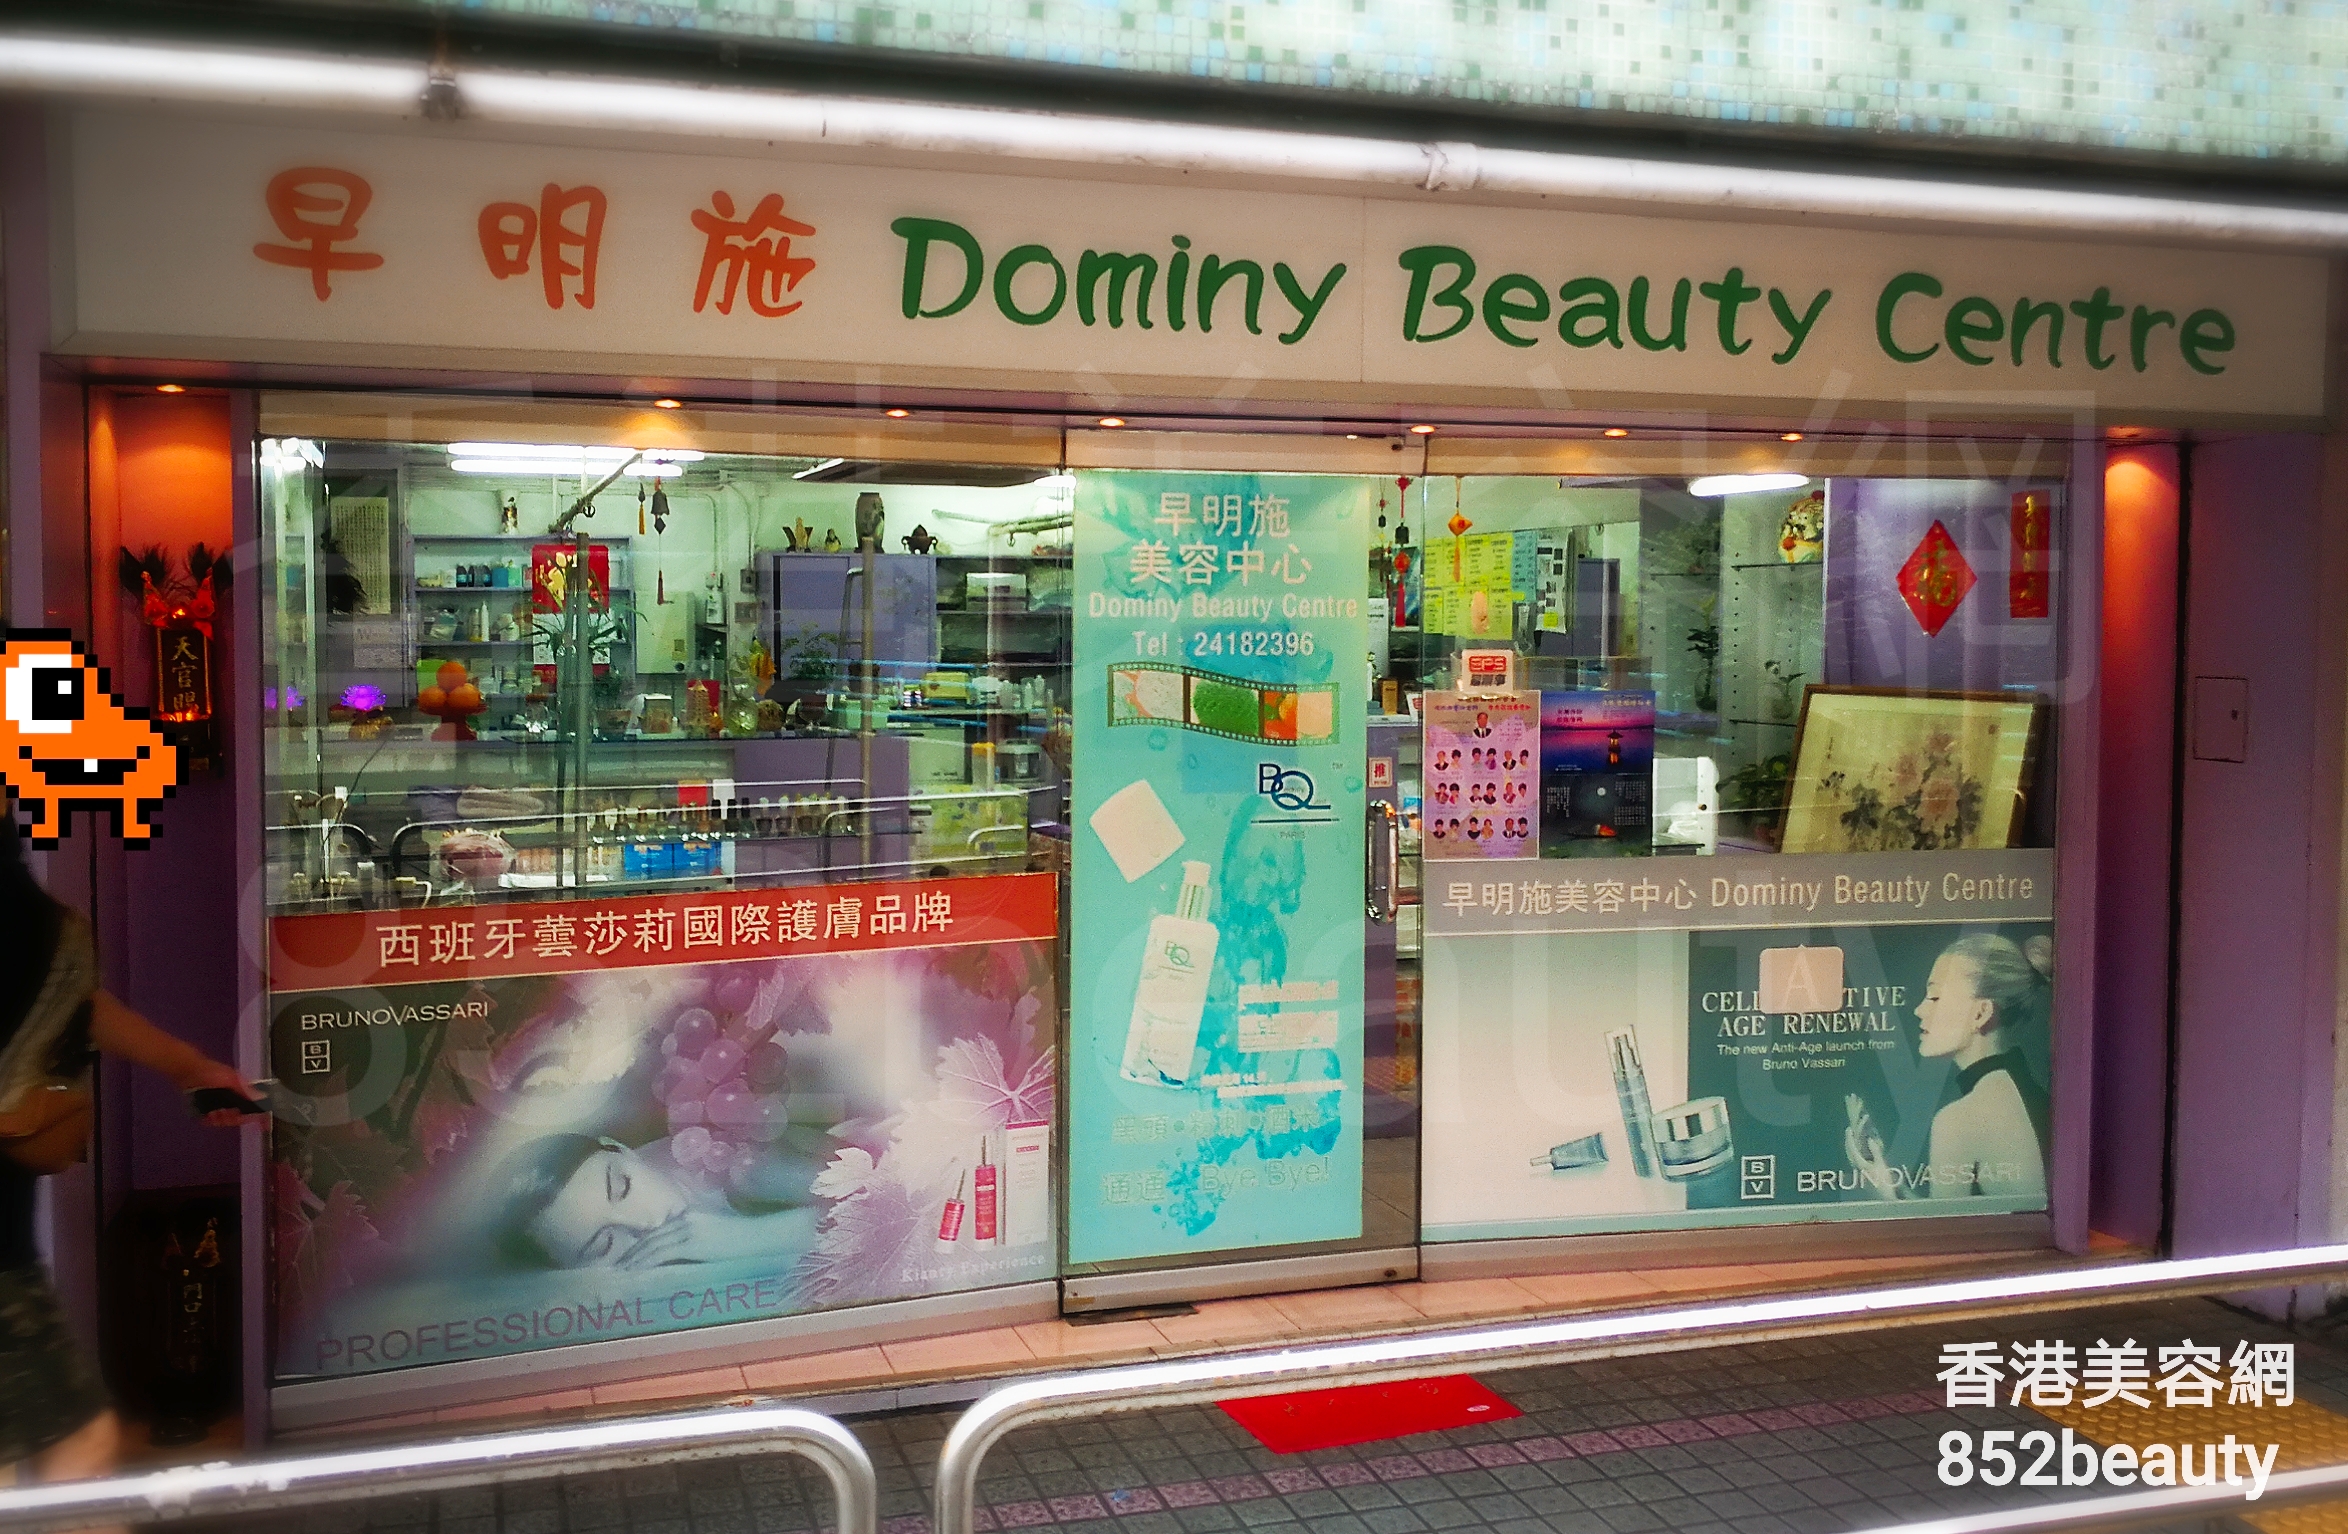 美容院 Beauty Salon: 早明施美容中心 Dominy Beauty Centre